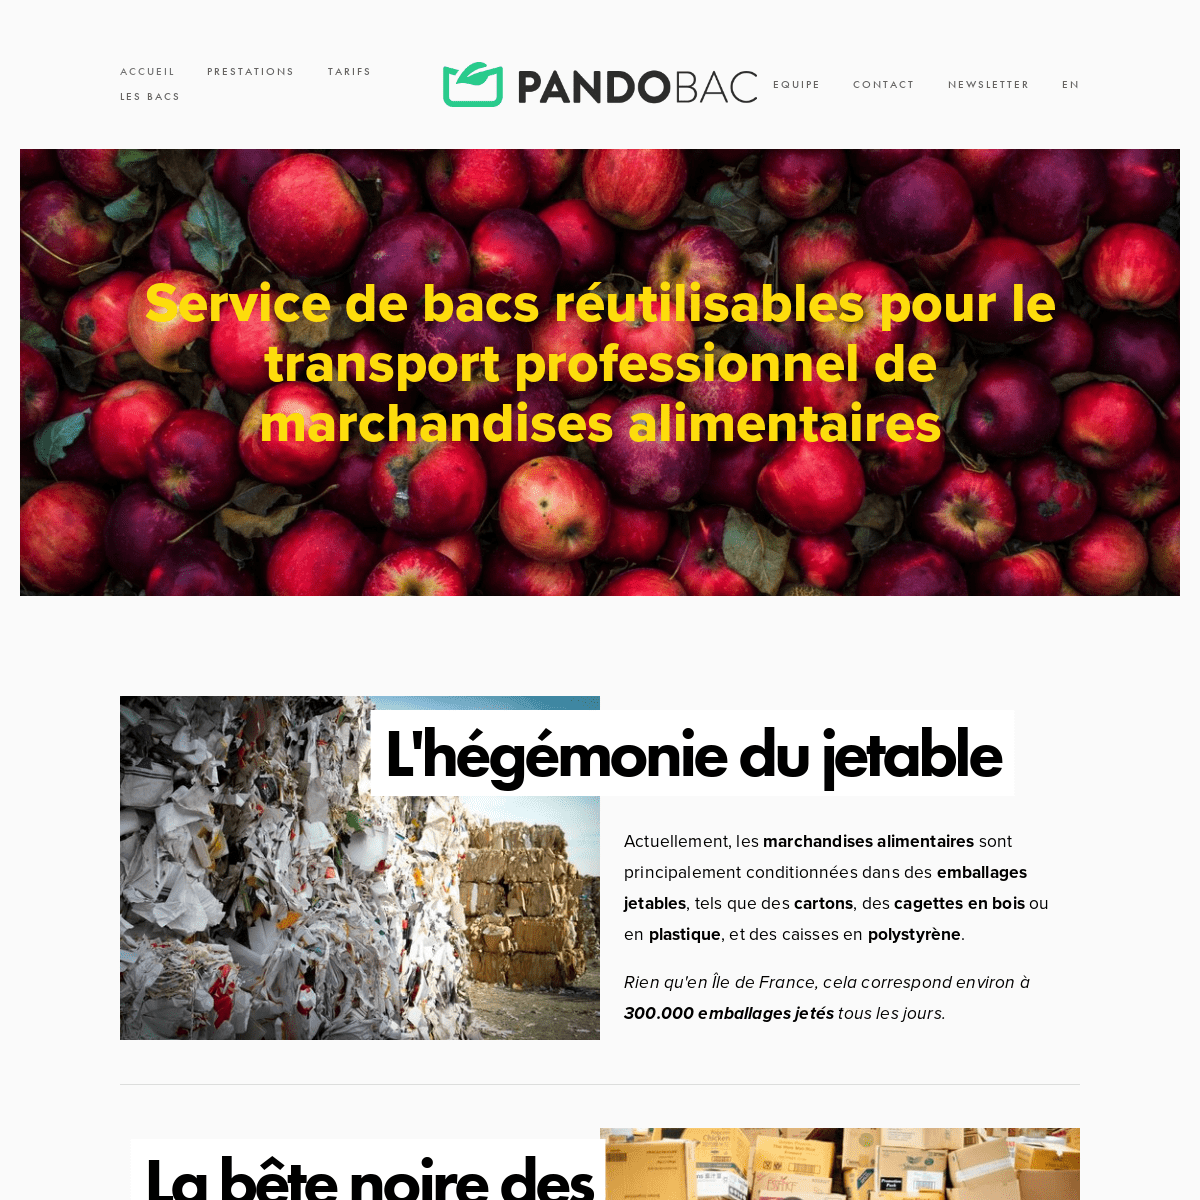 A complete backup of pandobac.com